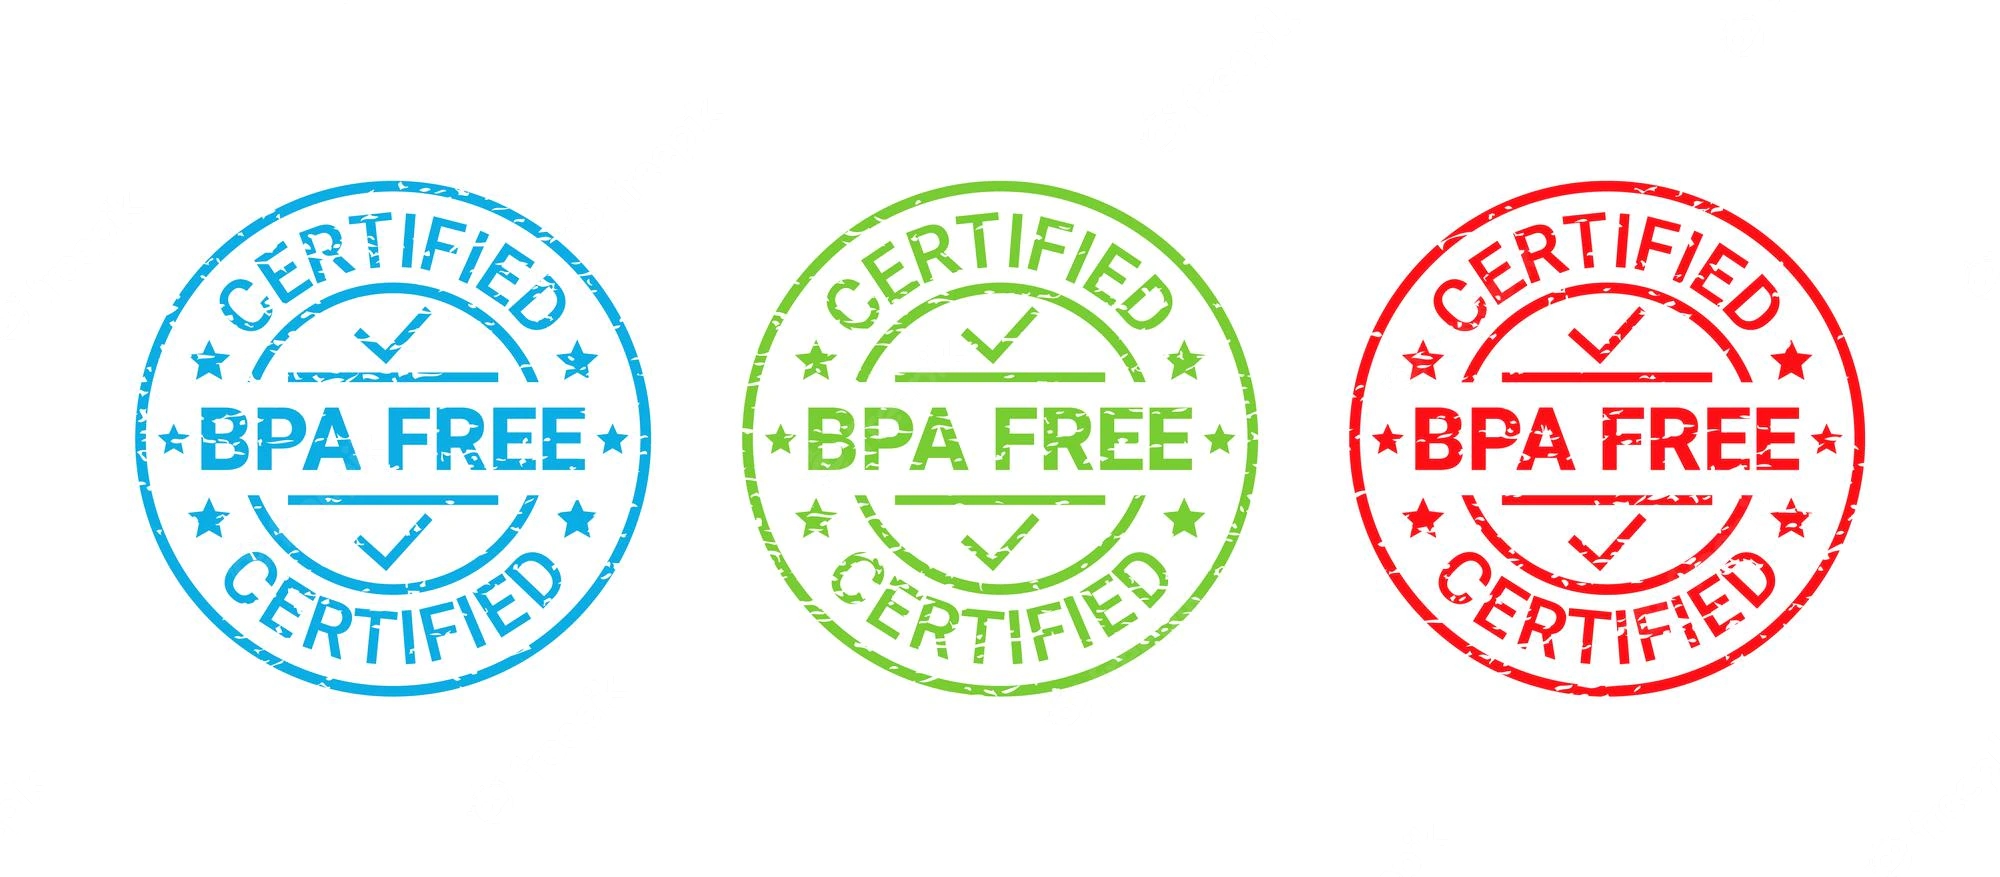 bpa-free-badge-stamp-non-toxic-plastic-emblem-eco-packaging-sticker-vector-illustration_171867-1086.webp